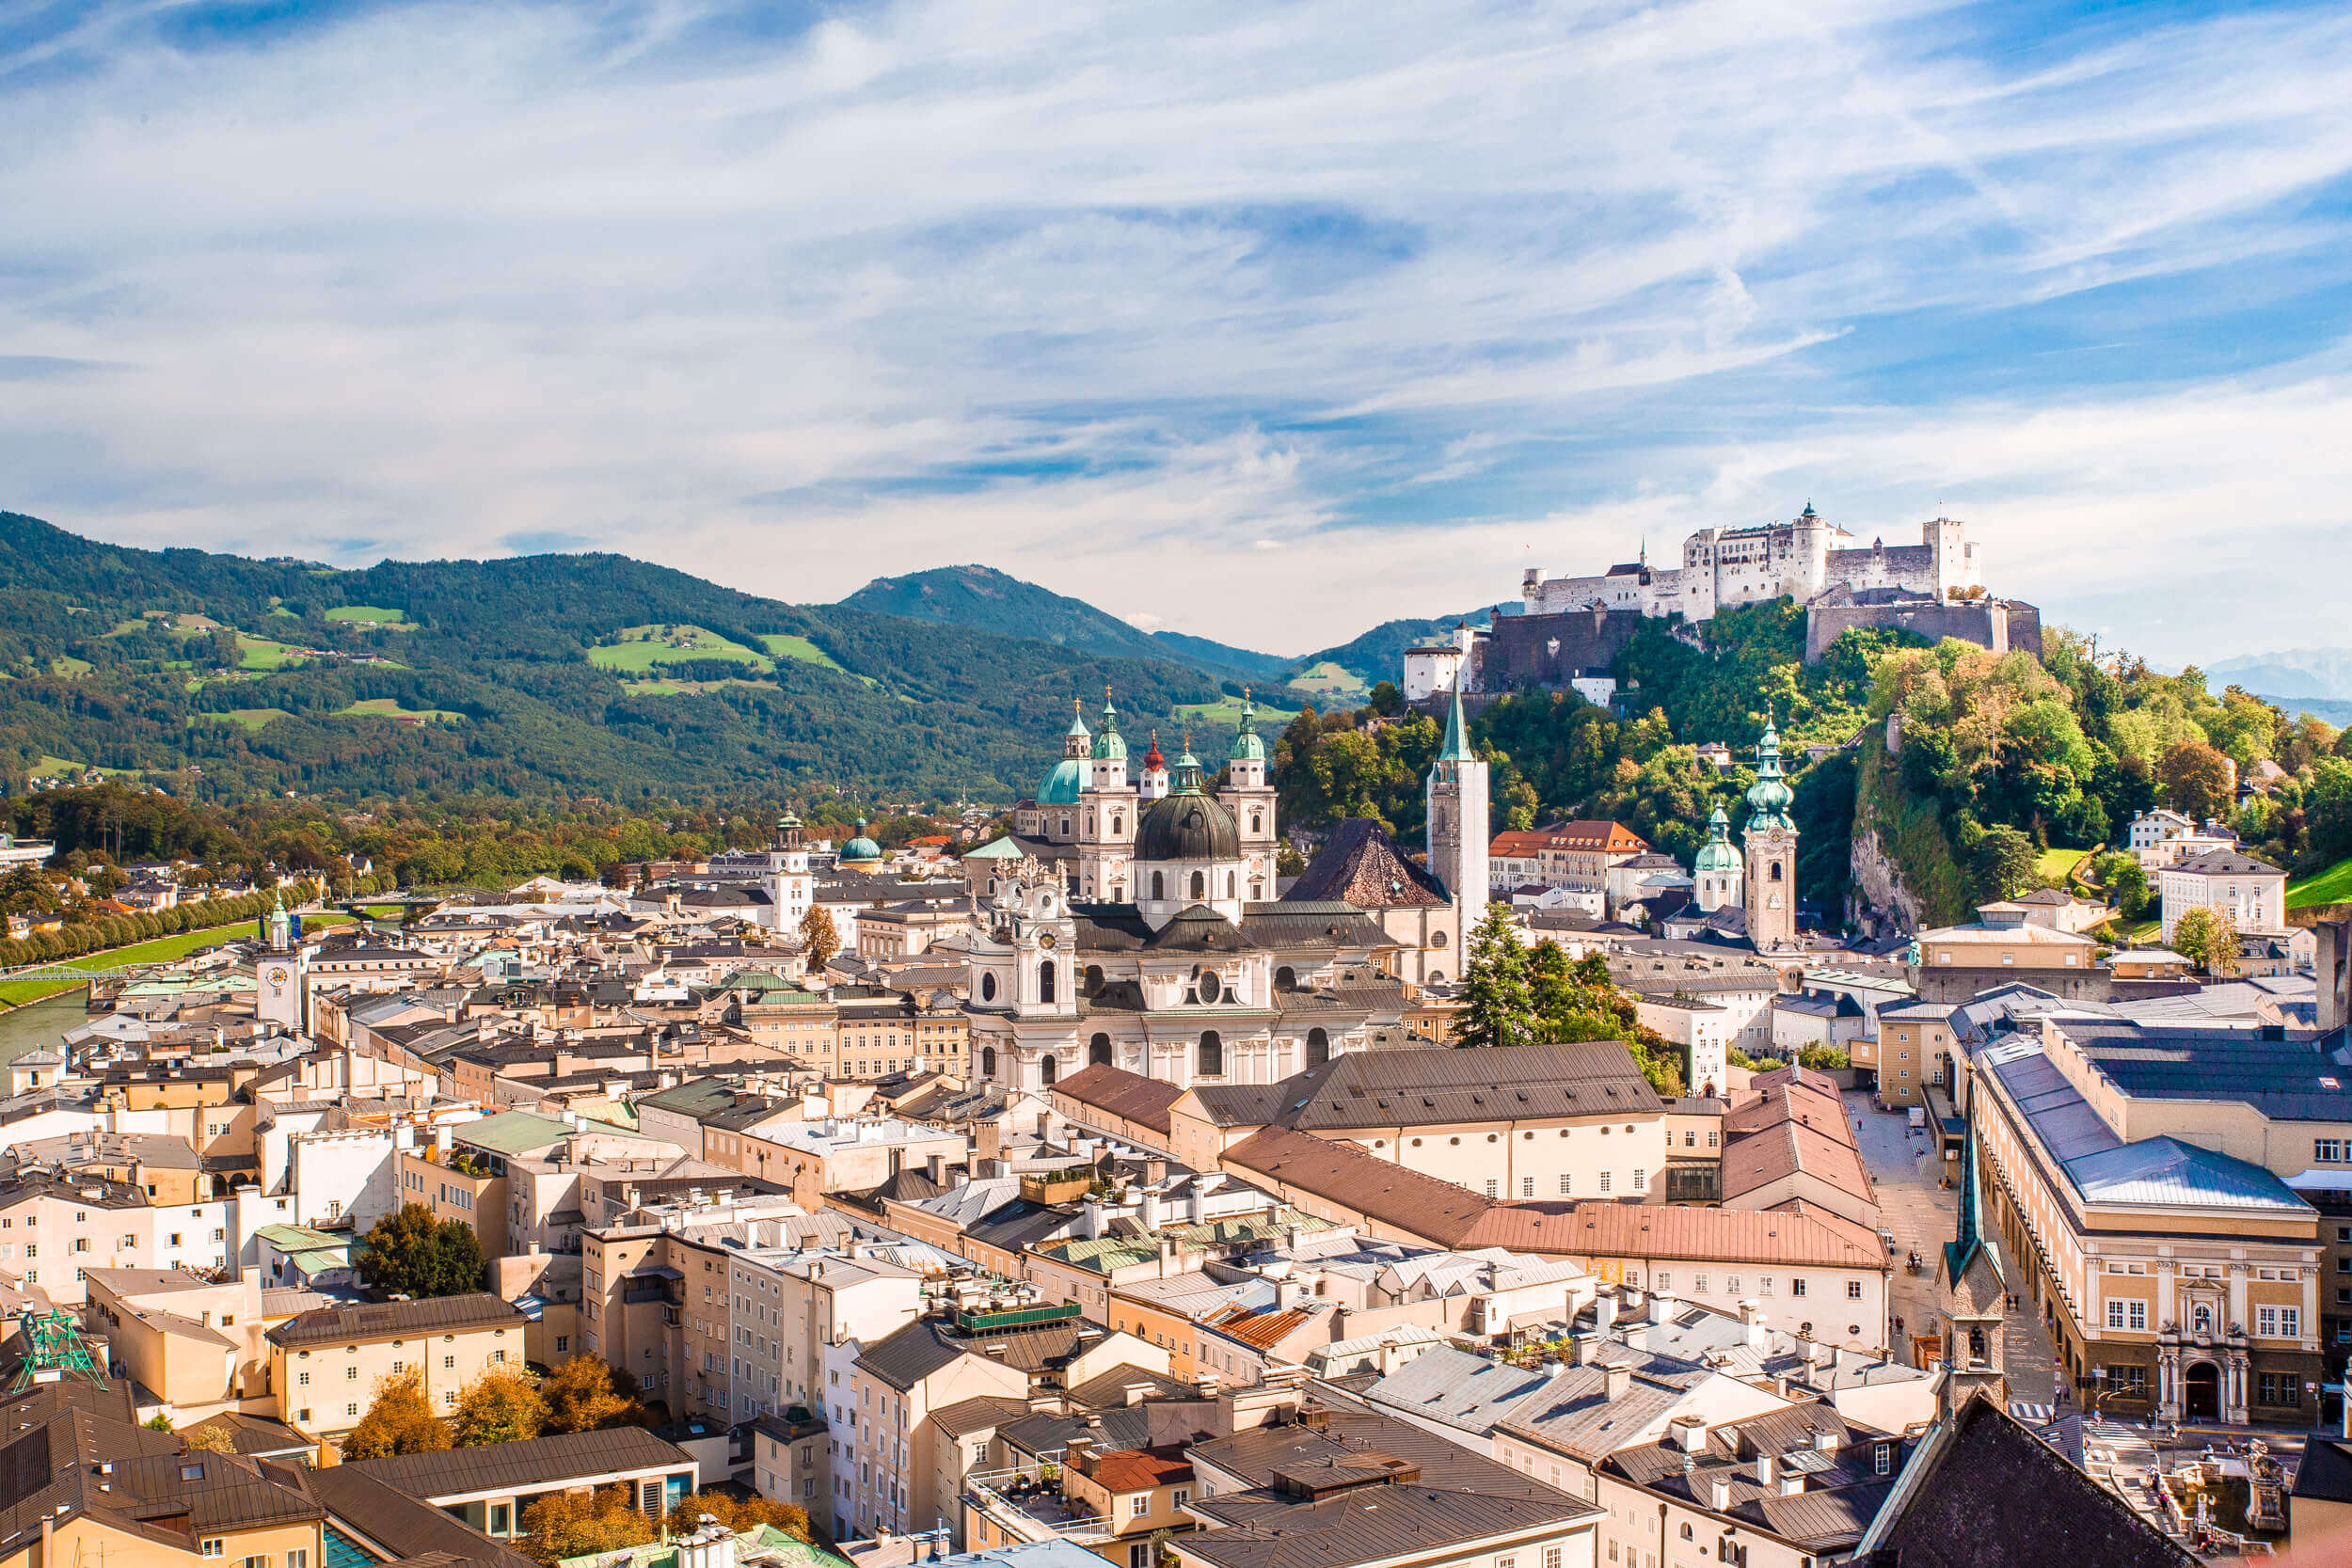 Salzburg togrejse